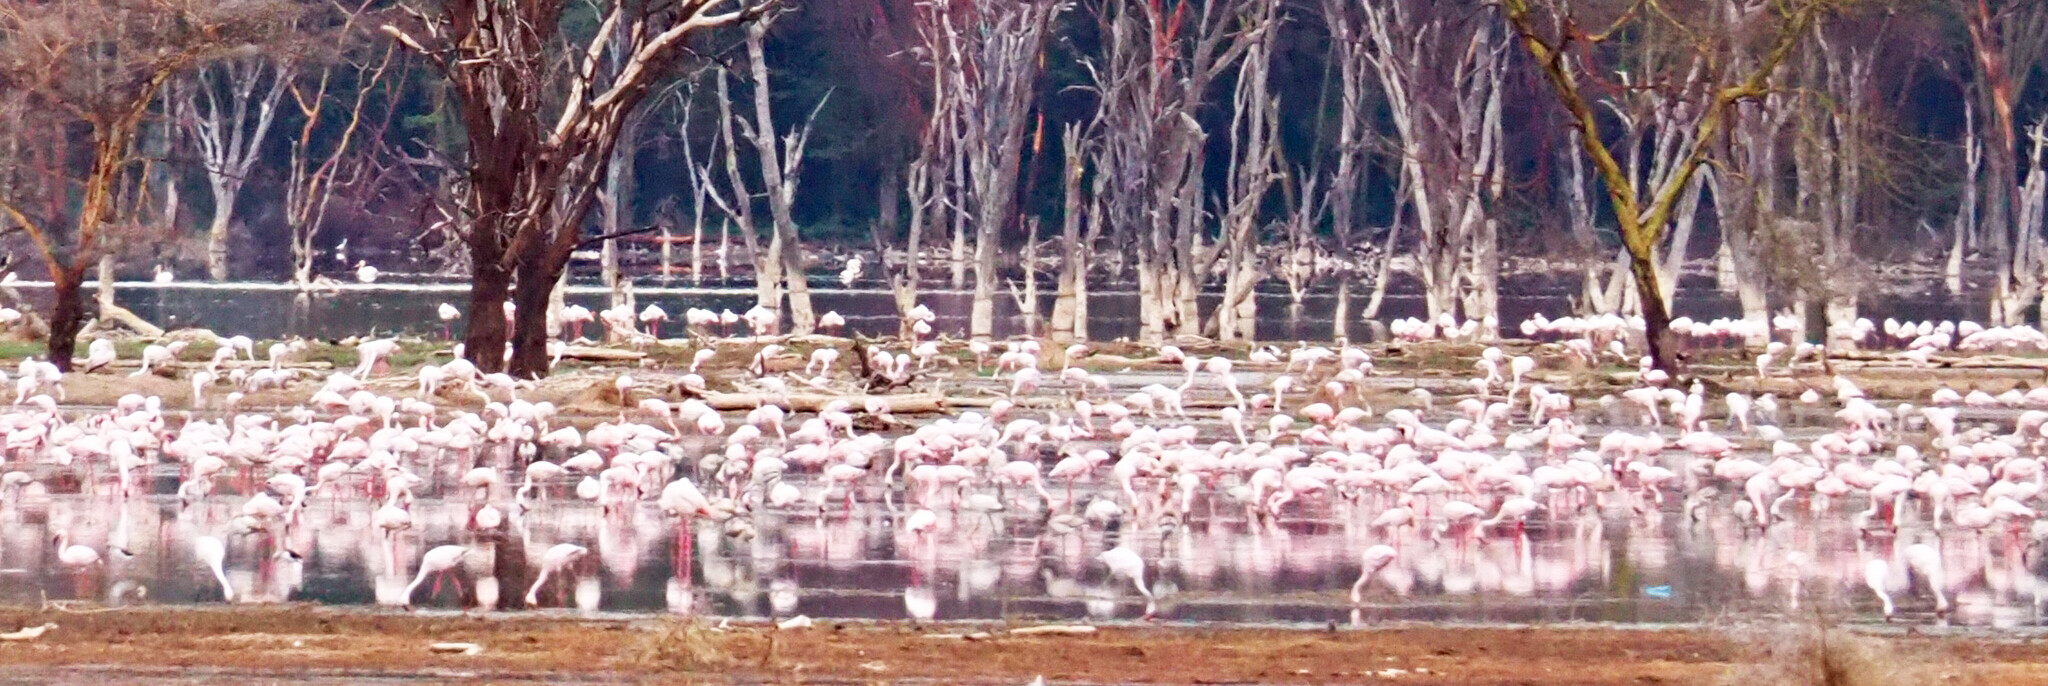 Reisebericht Kenia - Flamingos am Lake Nakuru